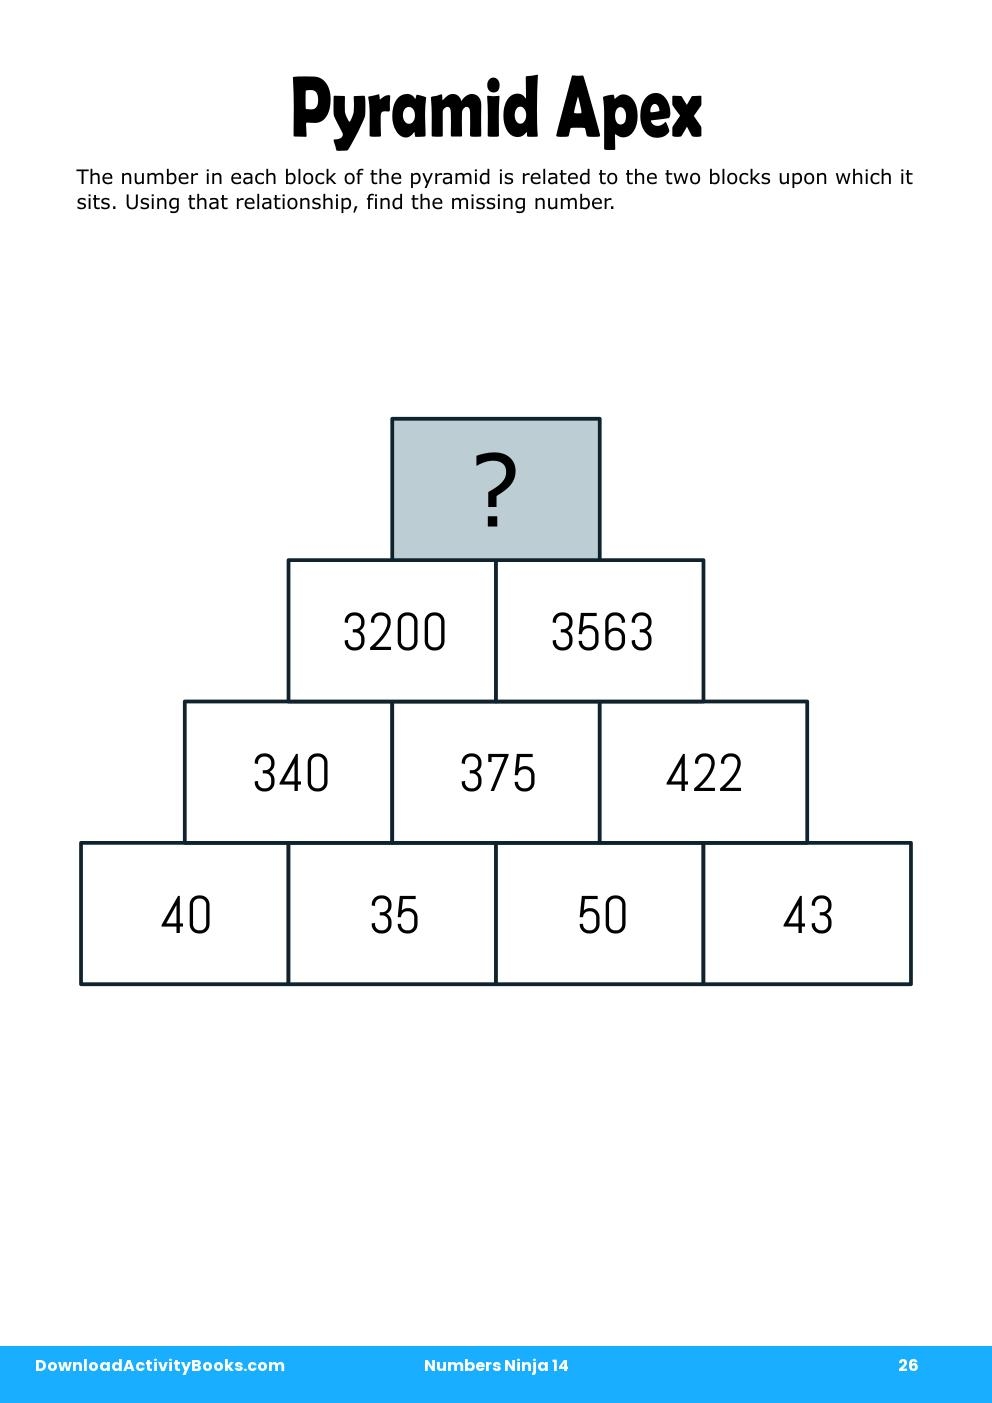 Pyramid Apex in Numbers Ninja 14